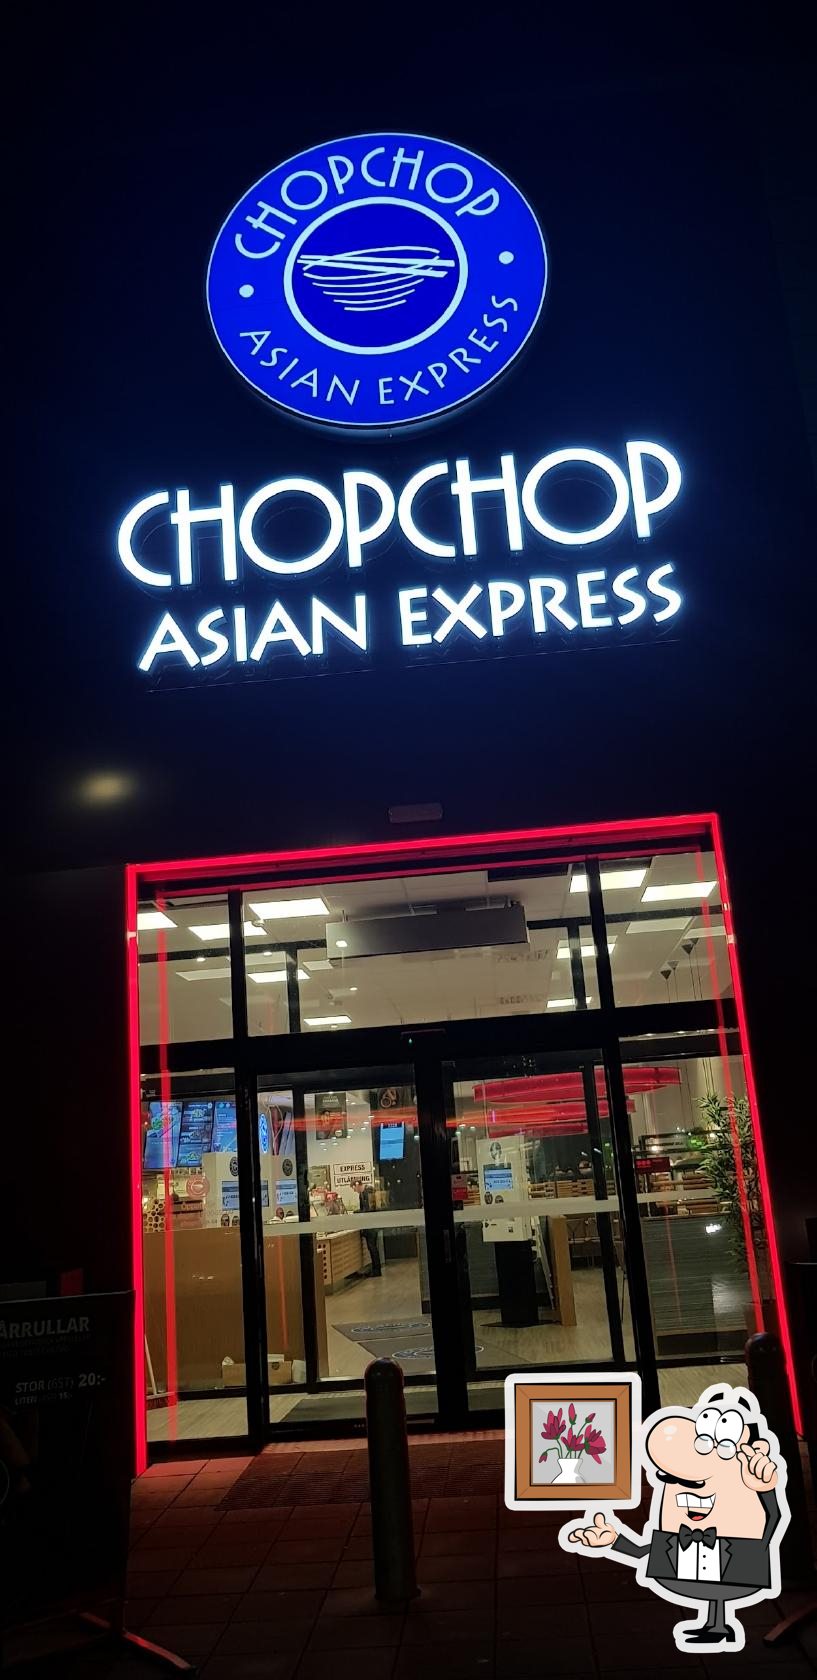 https://img.restaurantguru.com/r882-Chopchop-Asian-Express-design-2022-09-5.jpg